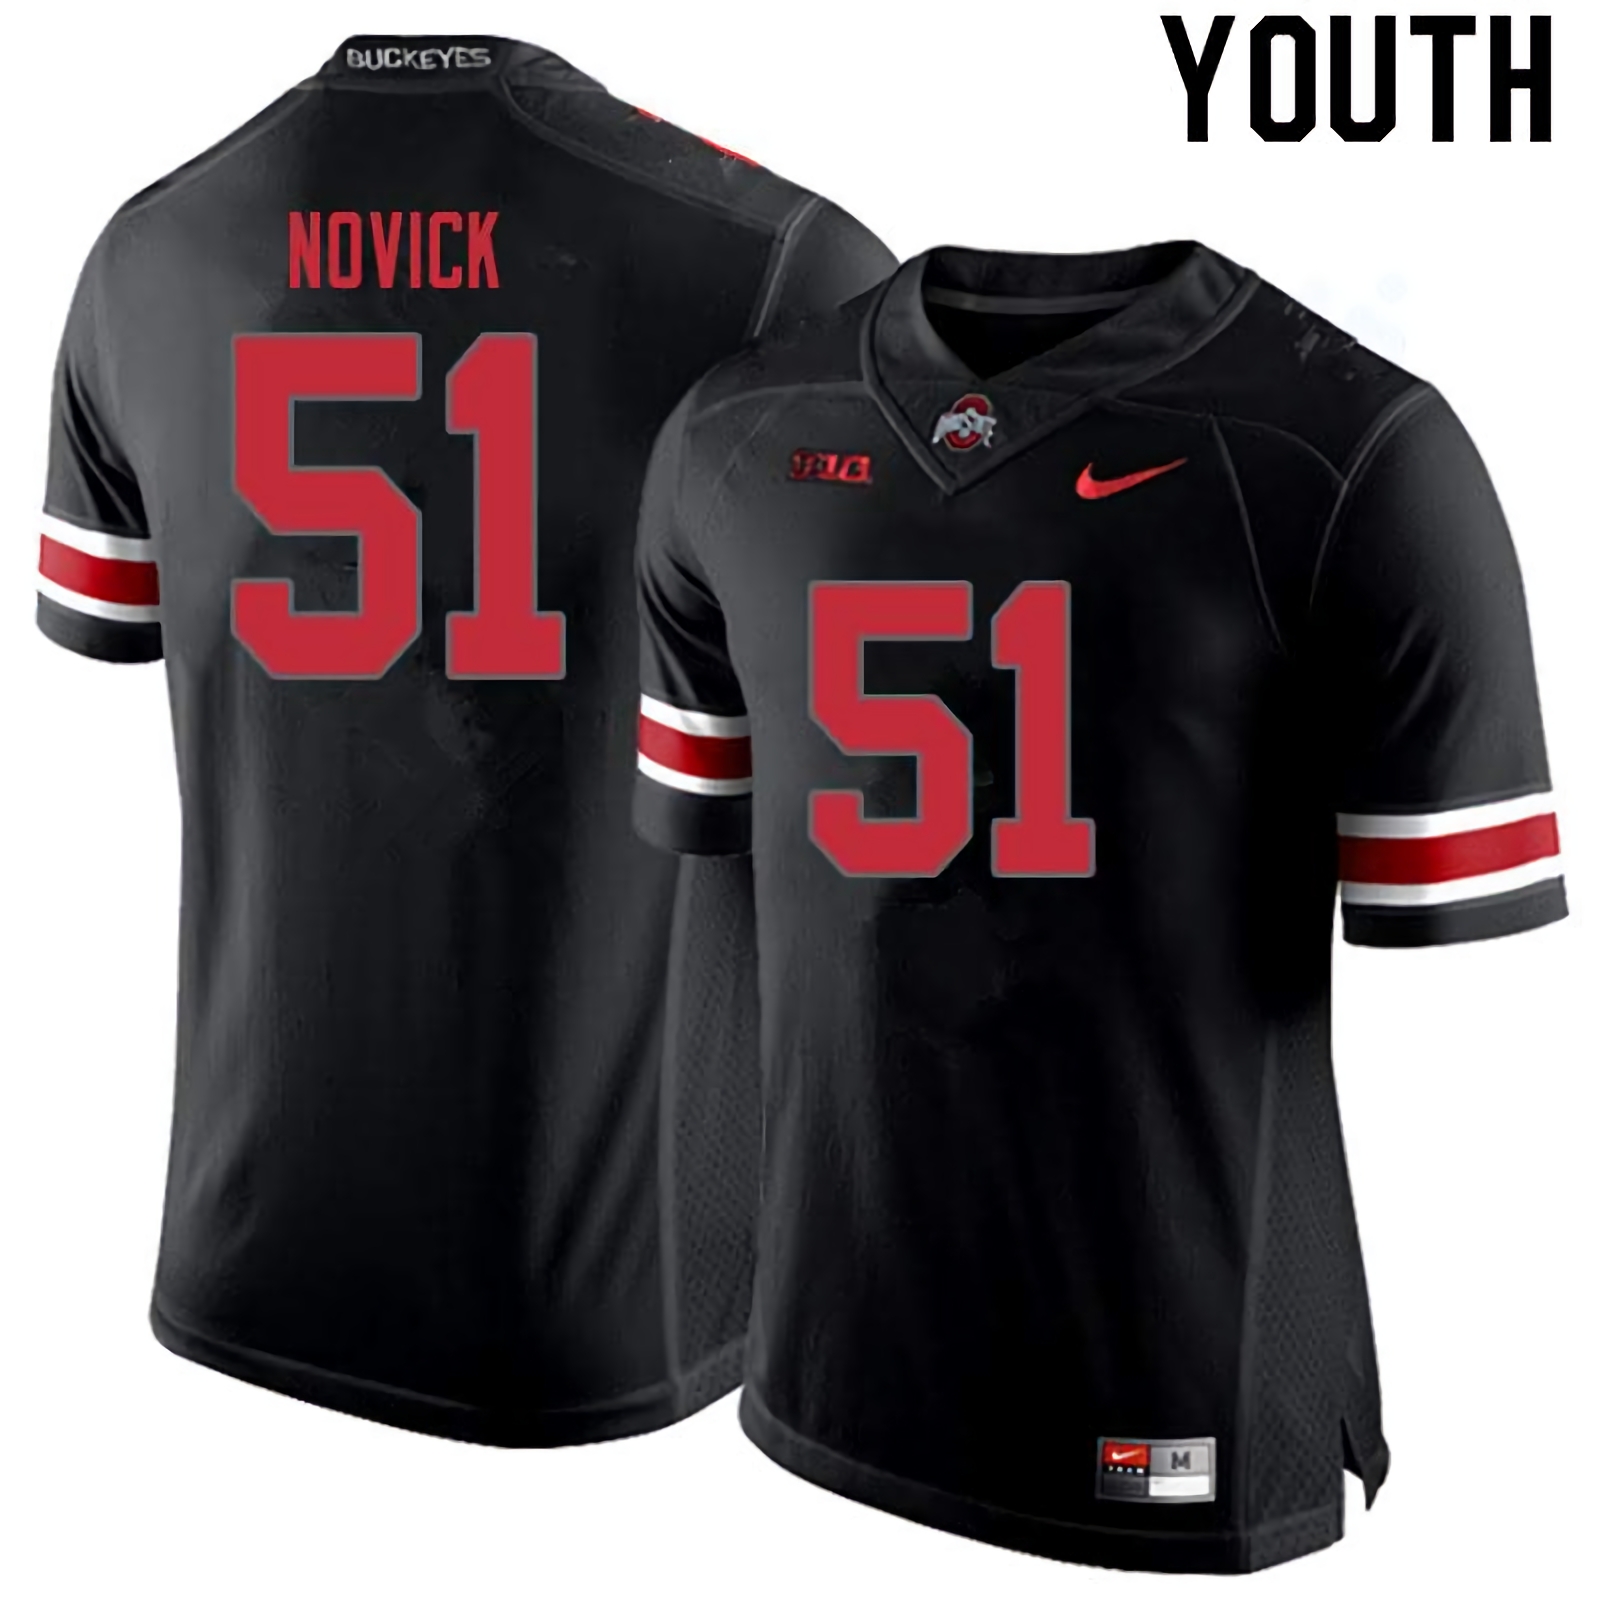 Brett Novick Ohio State Buckeyes Youth NCAA #51 Nike Blackout College Stitched Football Jersey YVH3156DK